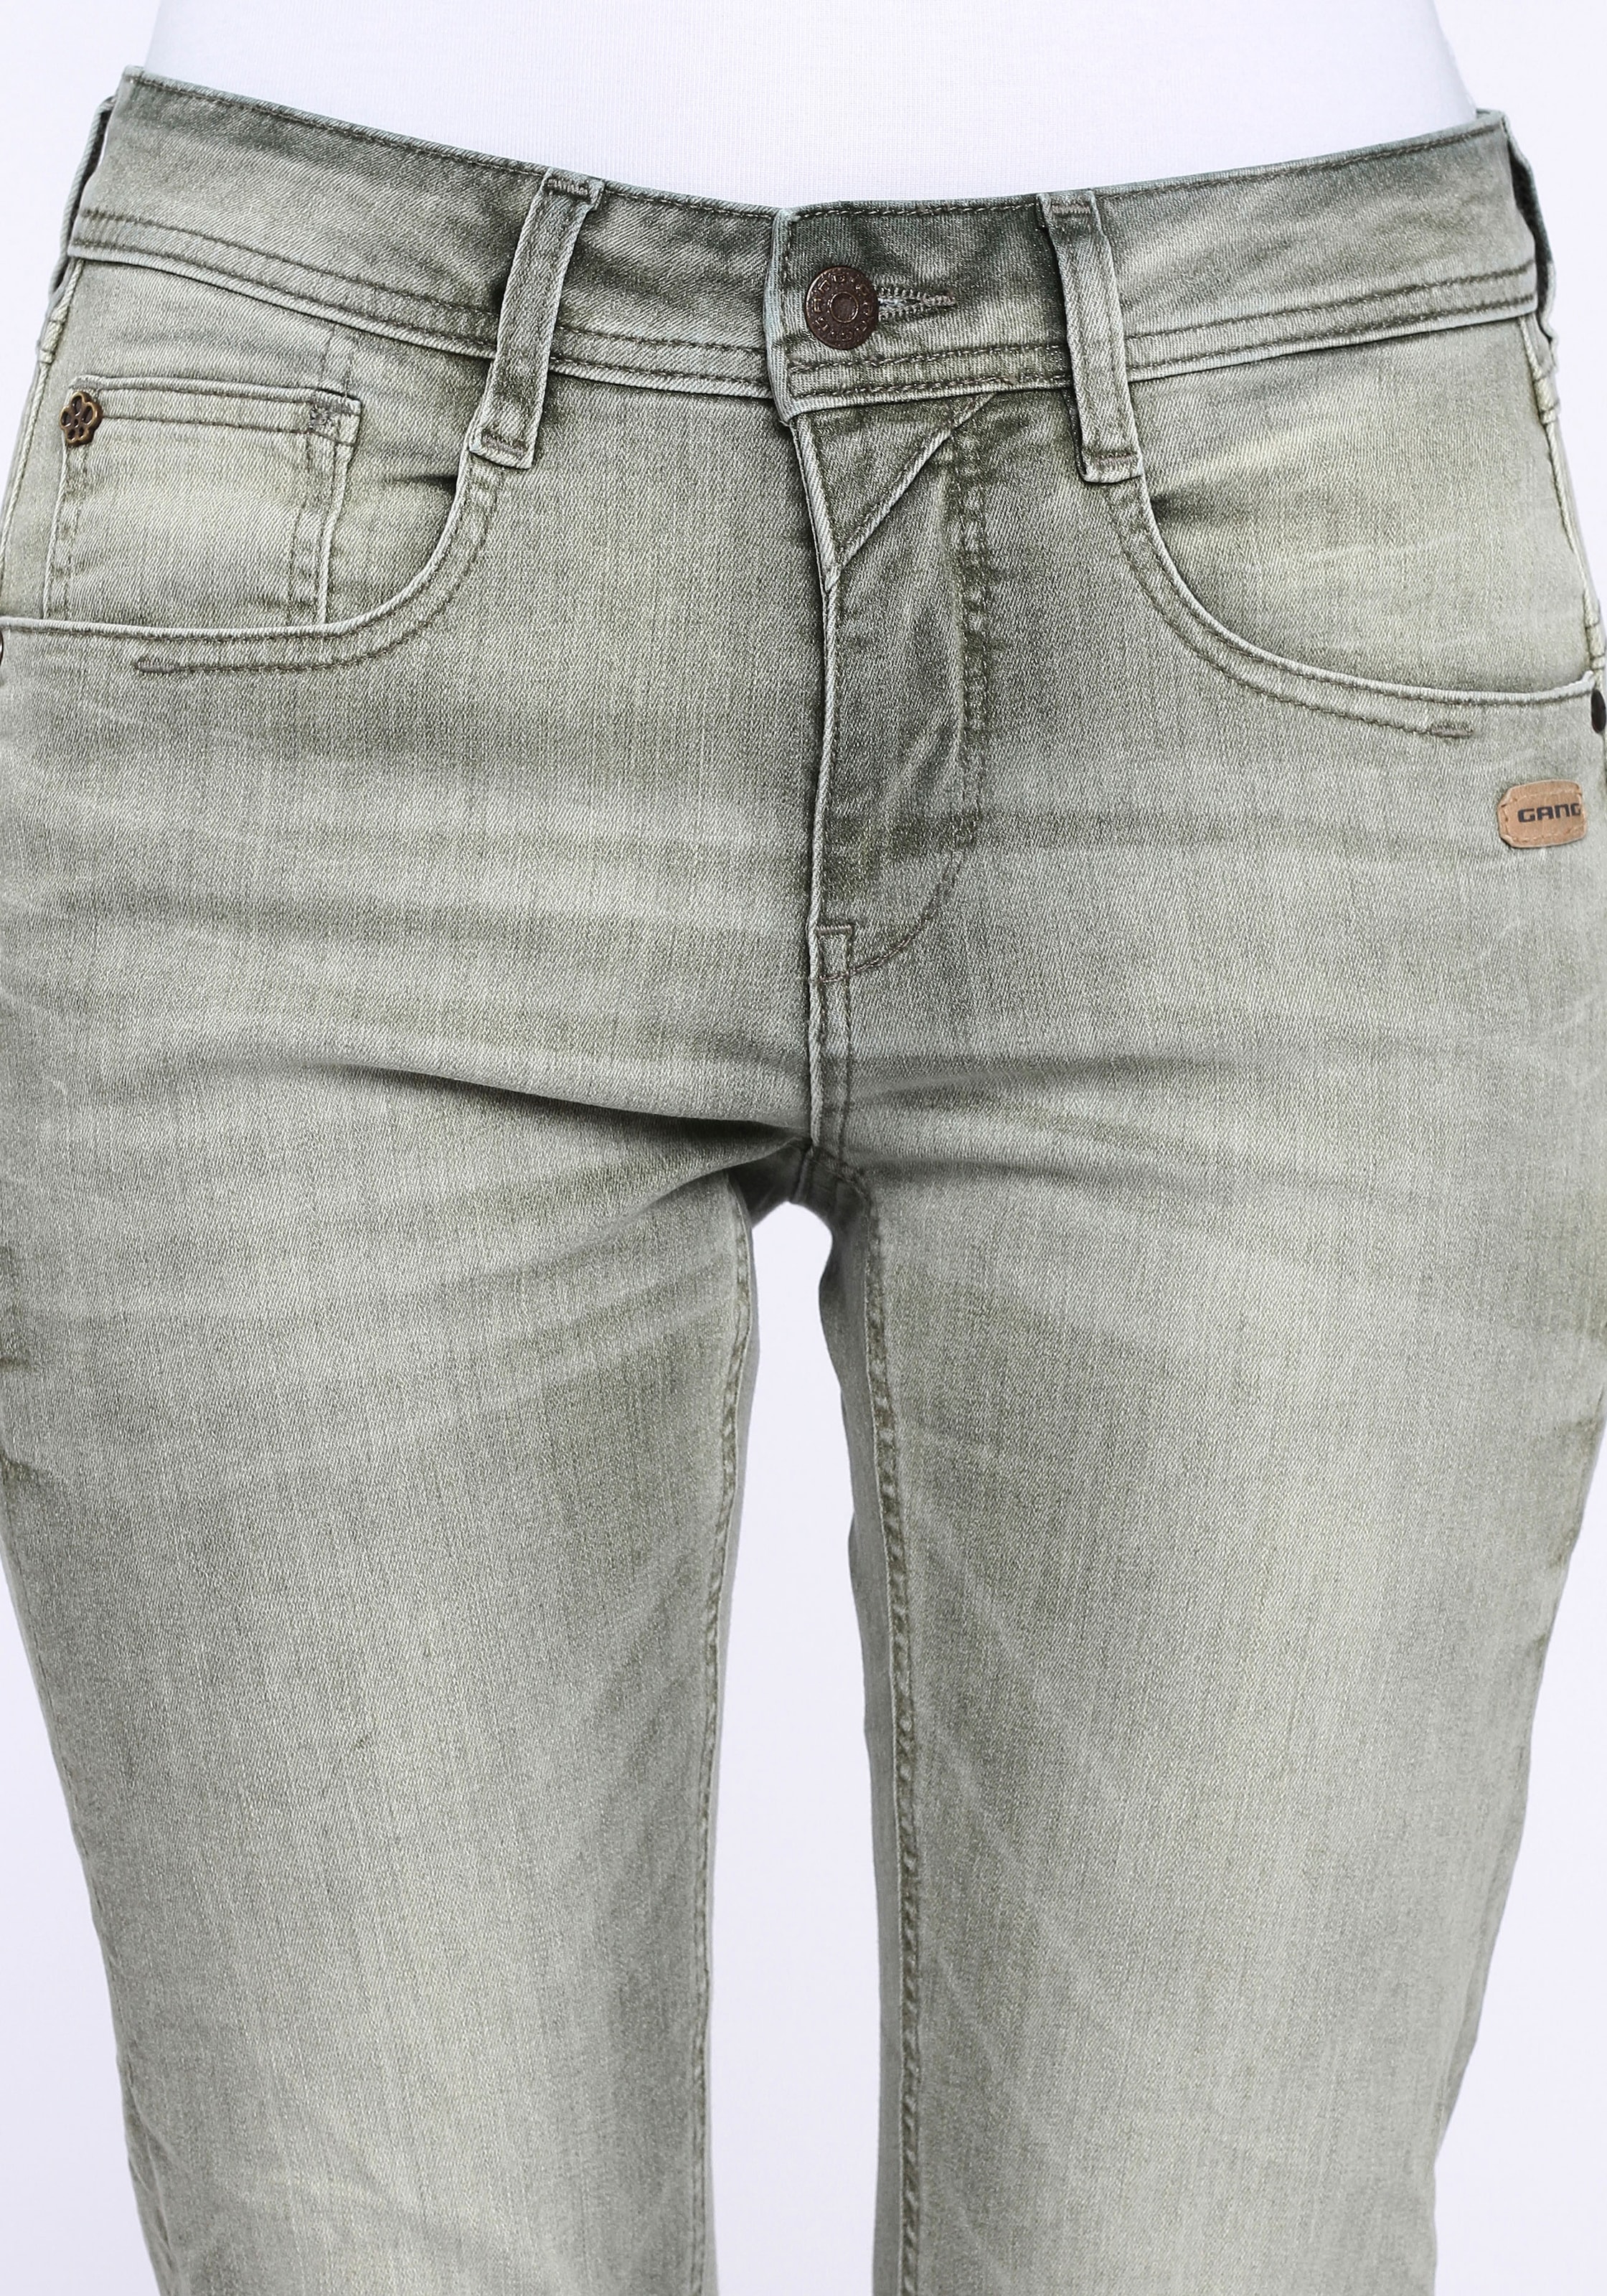 GANG OTTO online Relax-fit-Jeans durch kaufen bei Elasthan-Anteil perfekter »94AMELIE«, Sitz